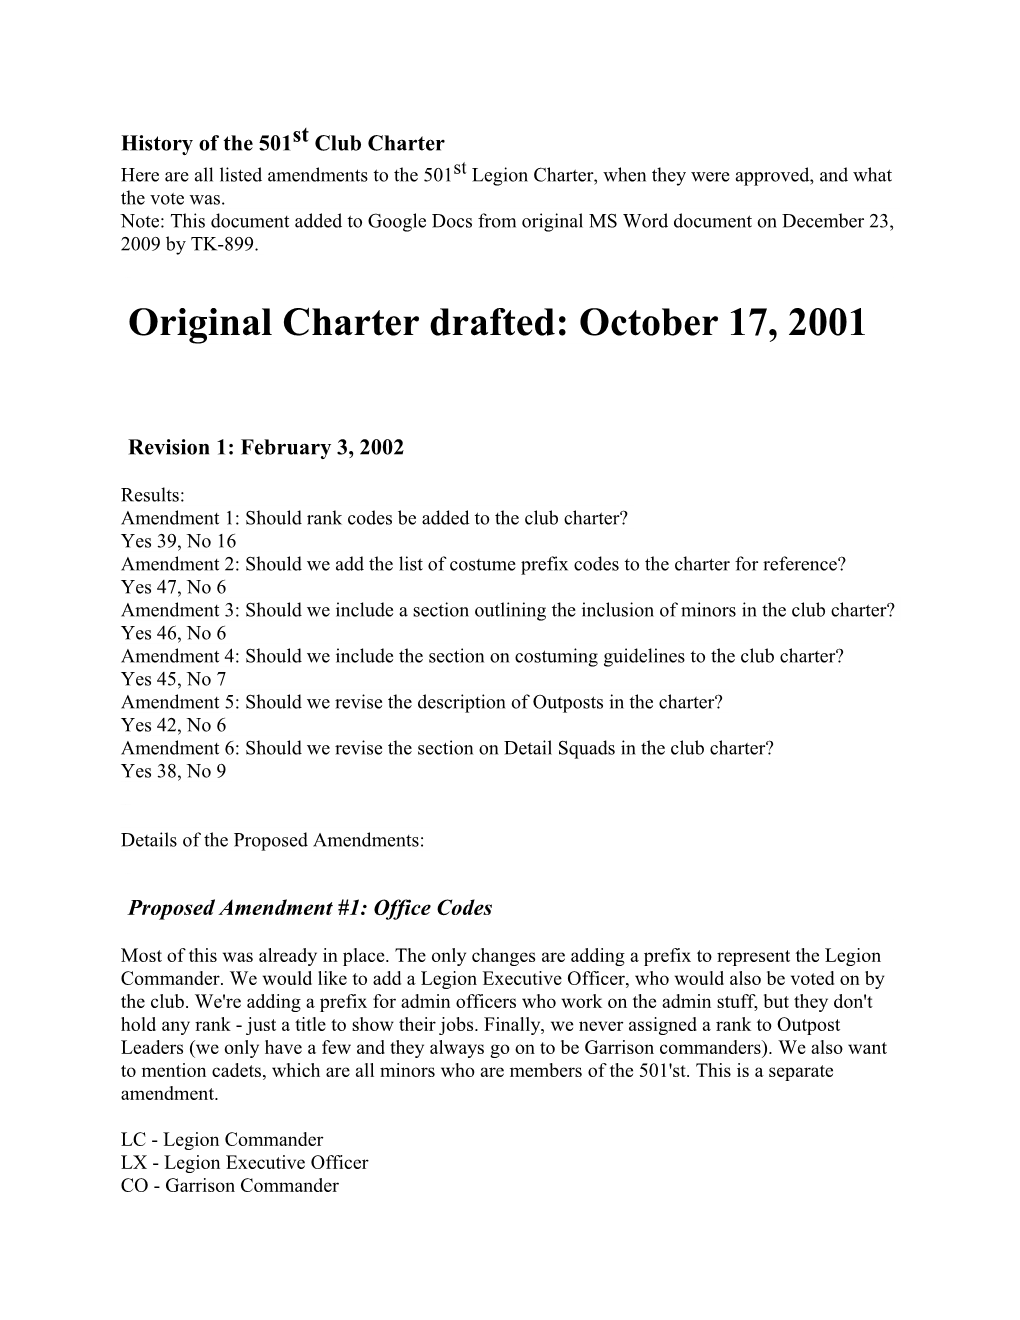 501St Legion: Evolution of the Charter